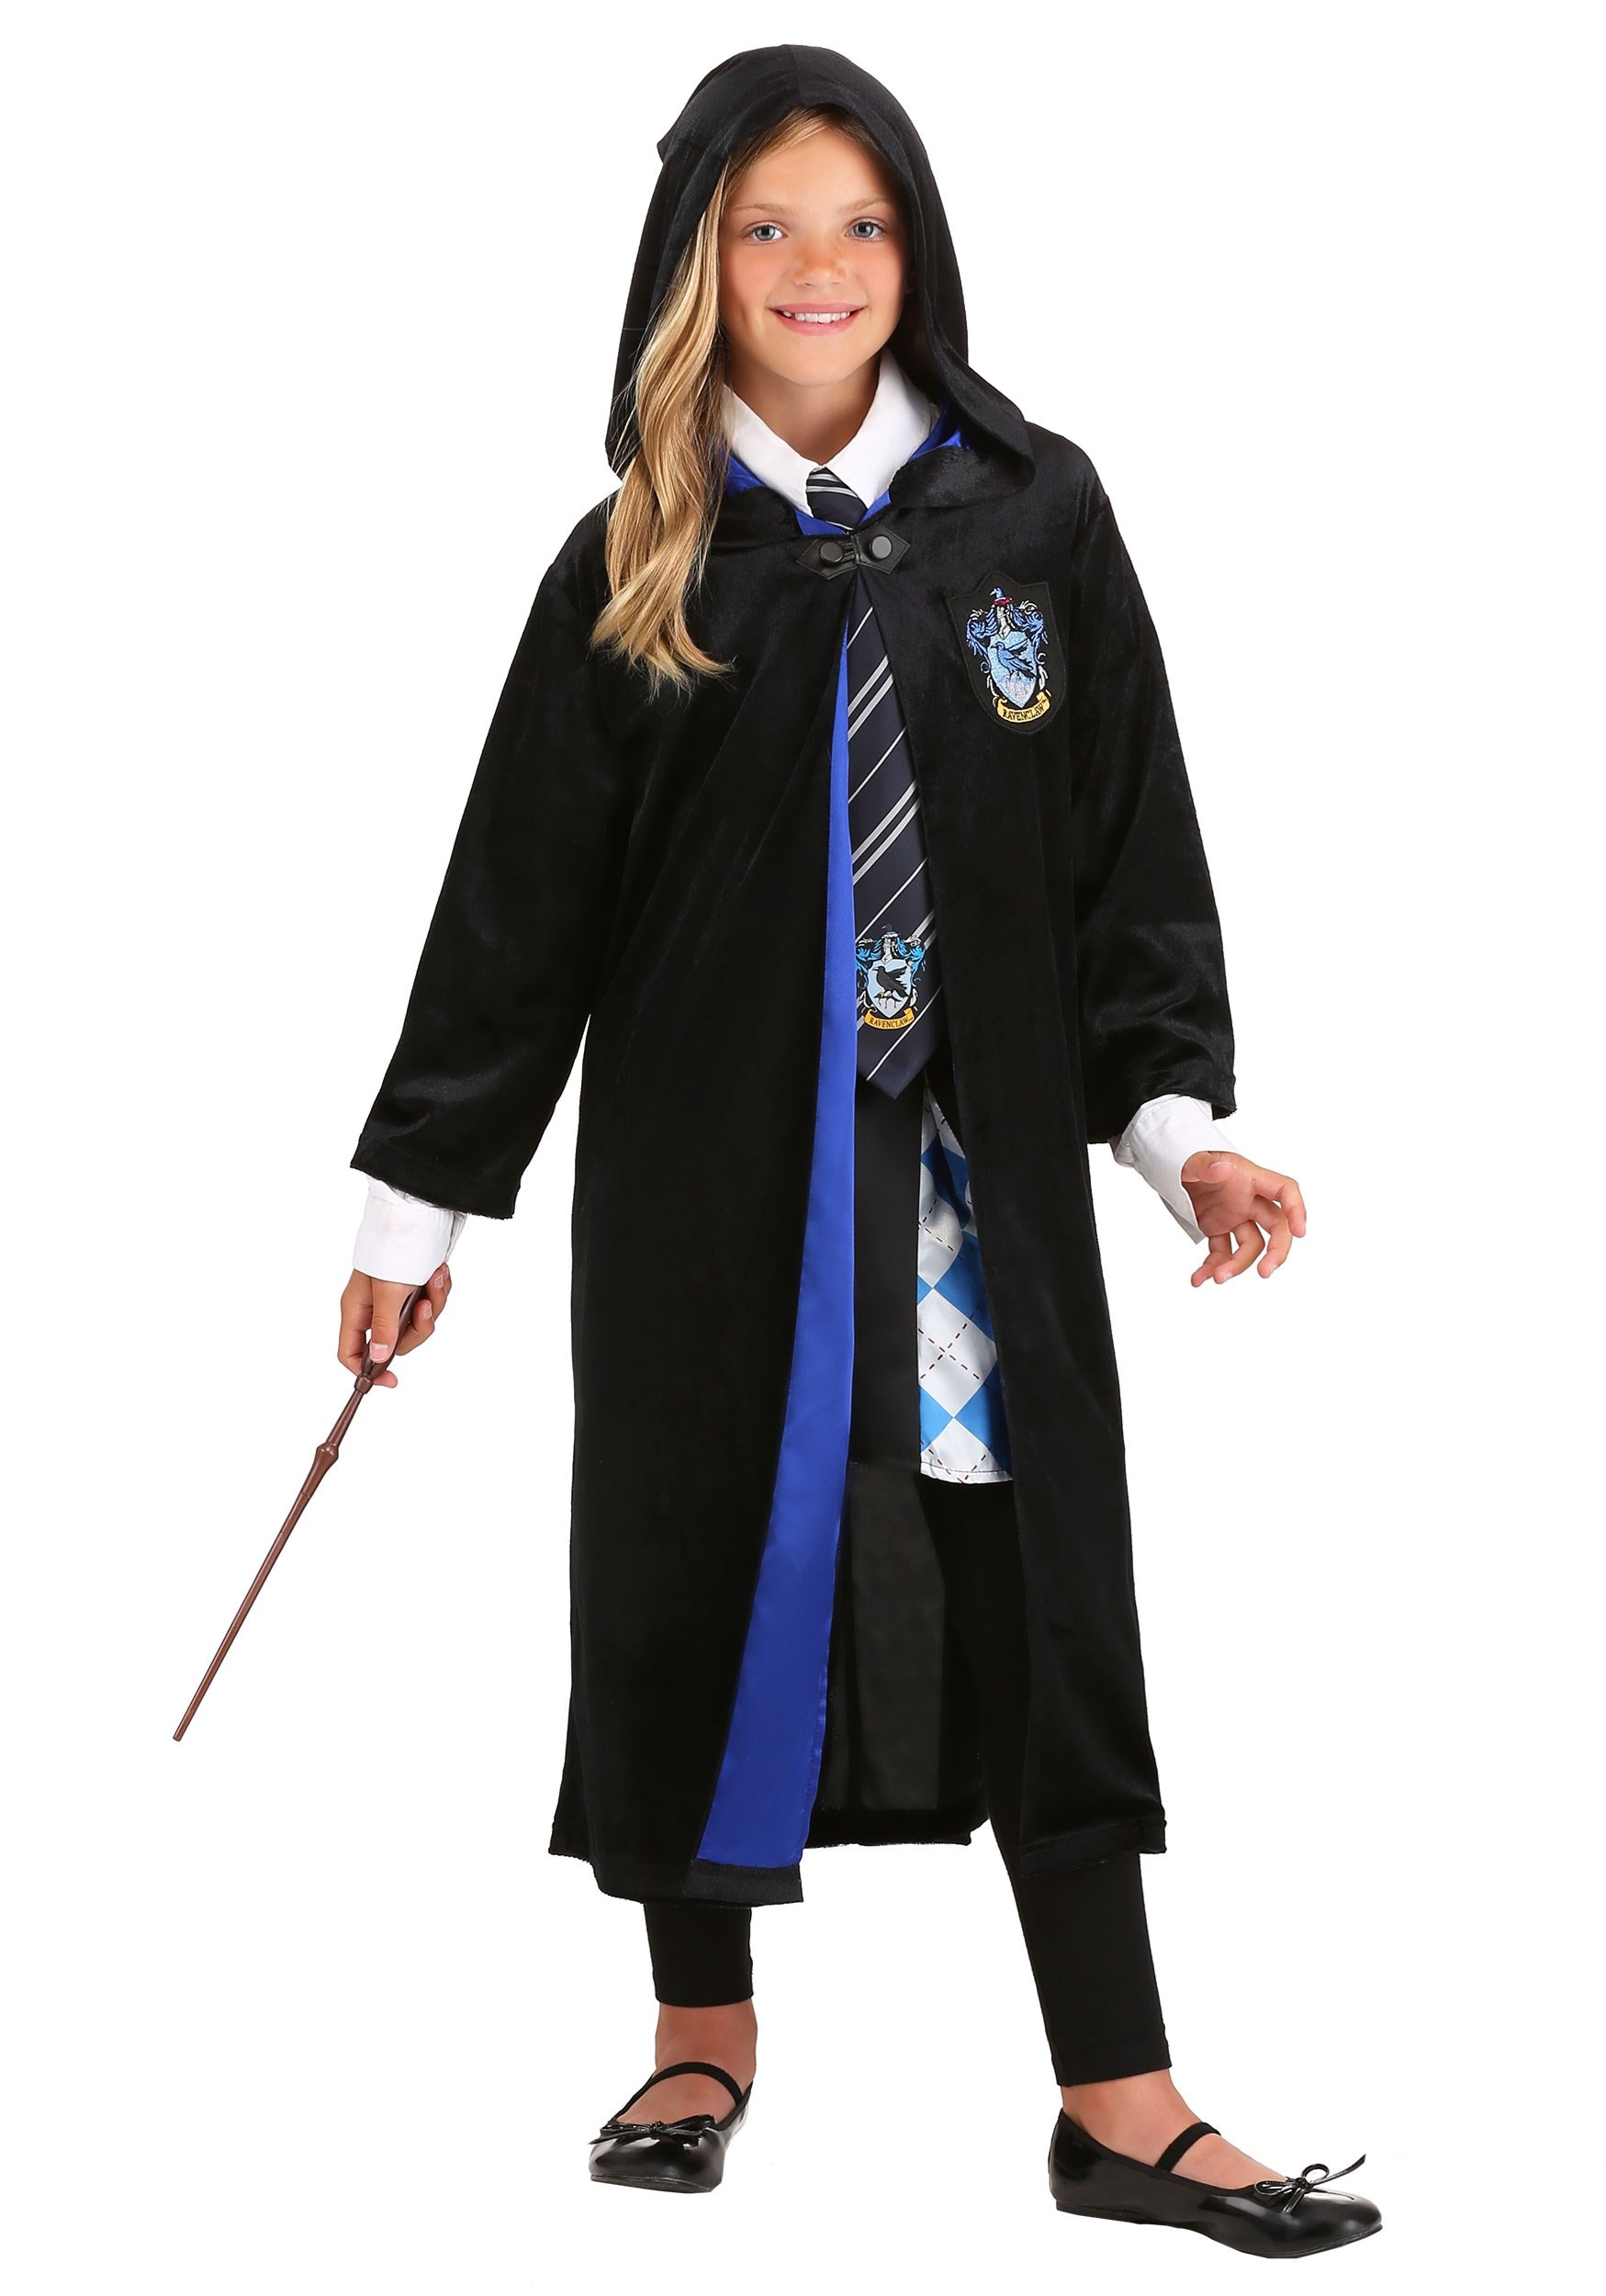 Modderig Dwaal Uittreksel Harry Potter Kids Deluxe Ravenclaw Robe Costume